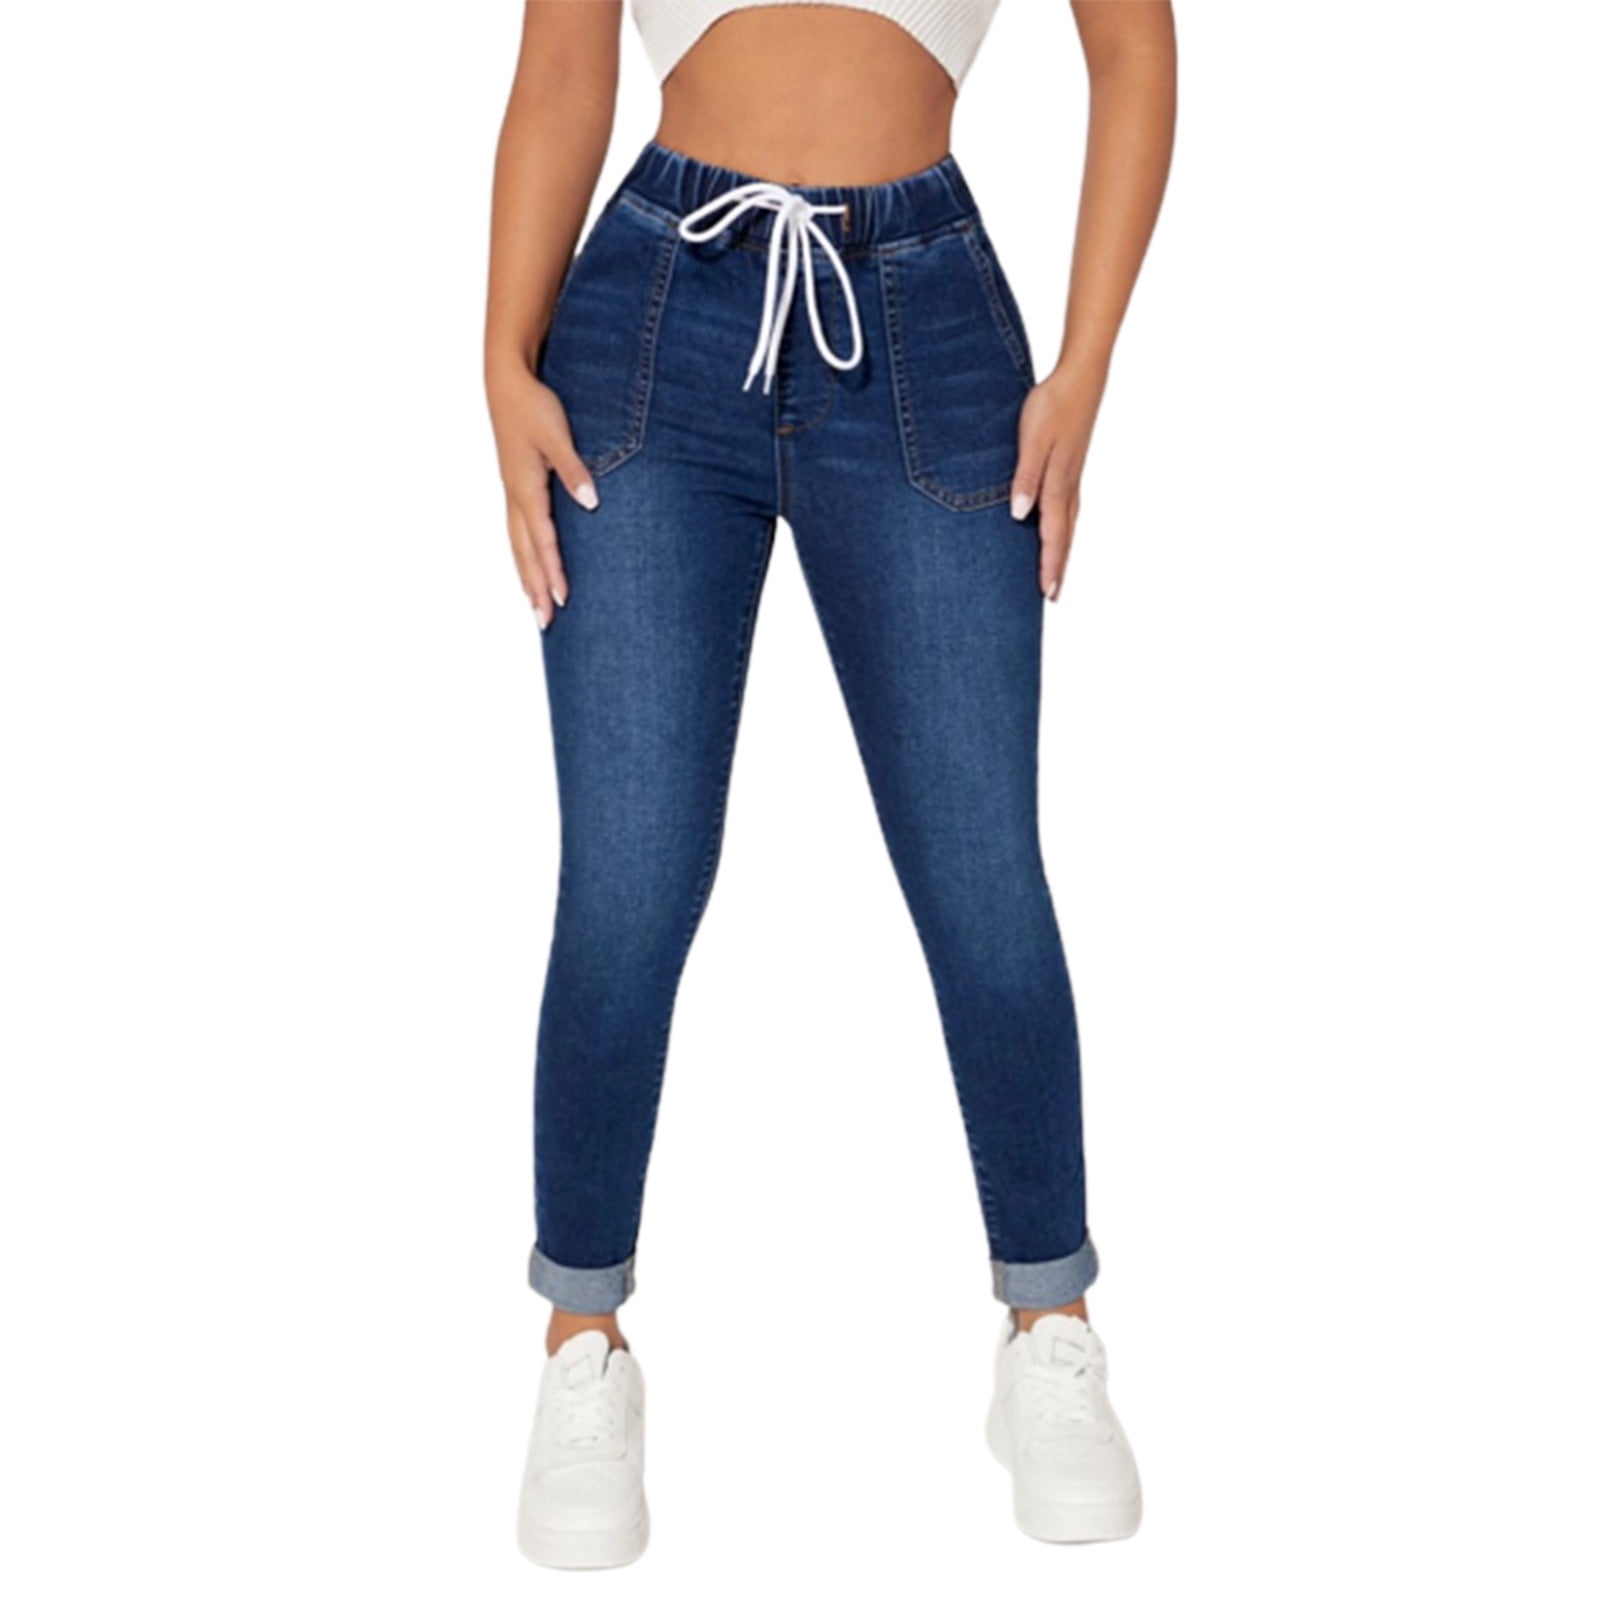 Babysbule Women's Drawstring Jeans Elastic Waist High Elastic Small ...